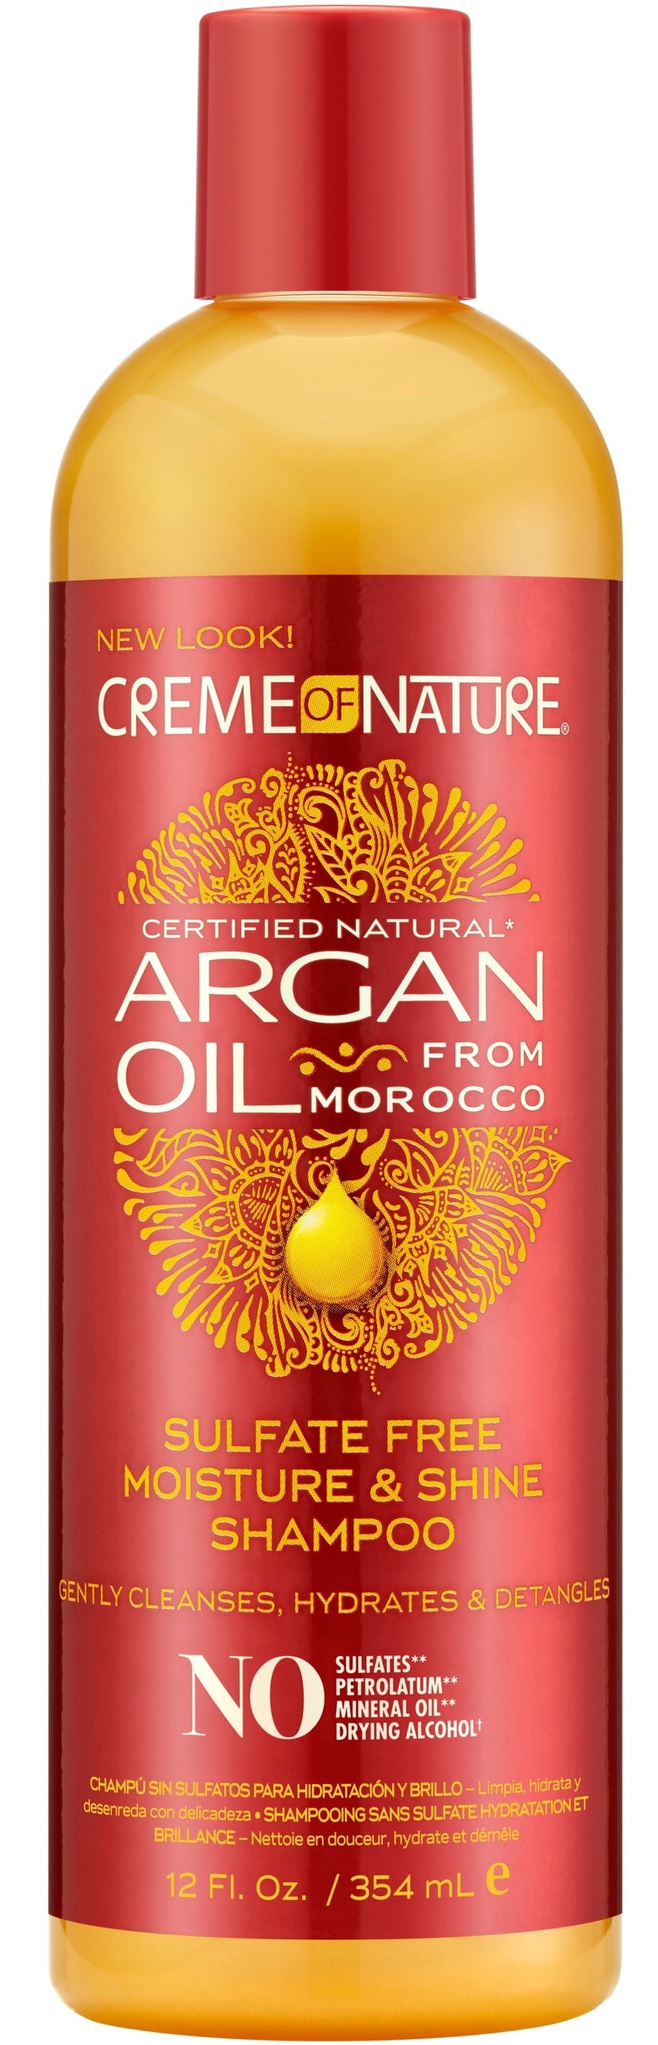 Creme of Nature Argan Oil Sulfate-free Moisture & Shine Shampoo